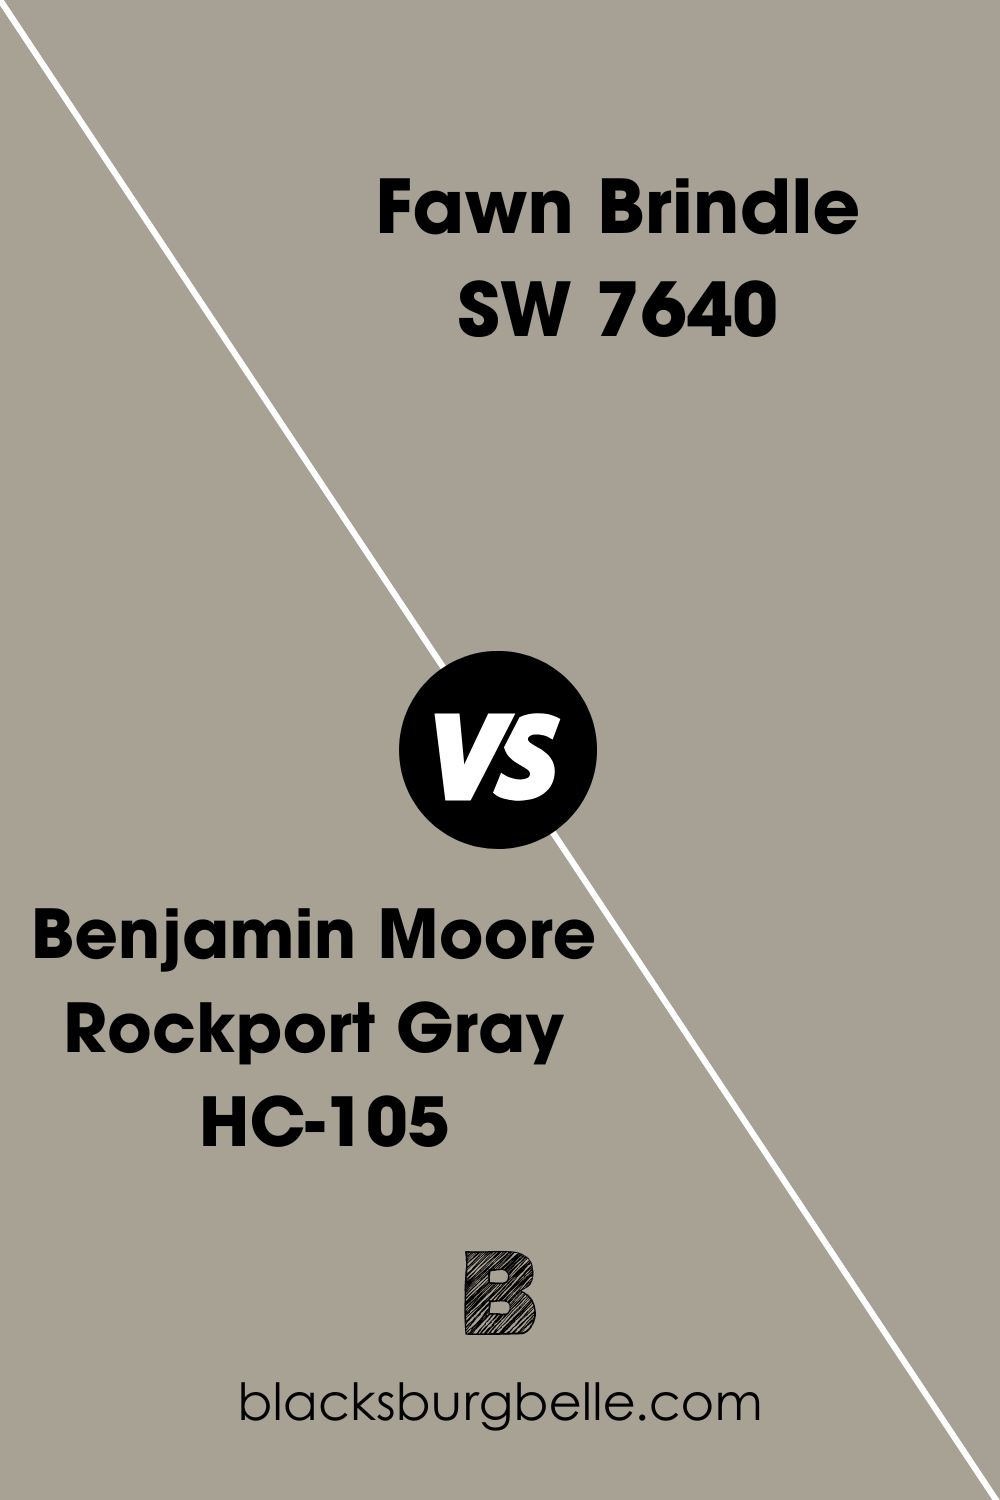 Benjamin Moore Rockport Gray HC-105